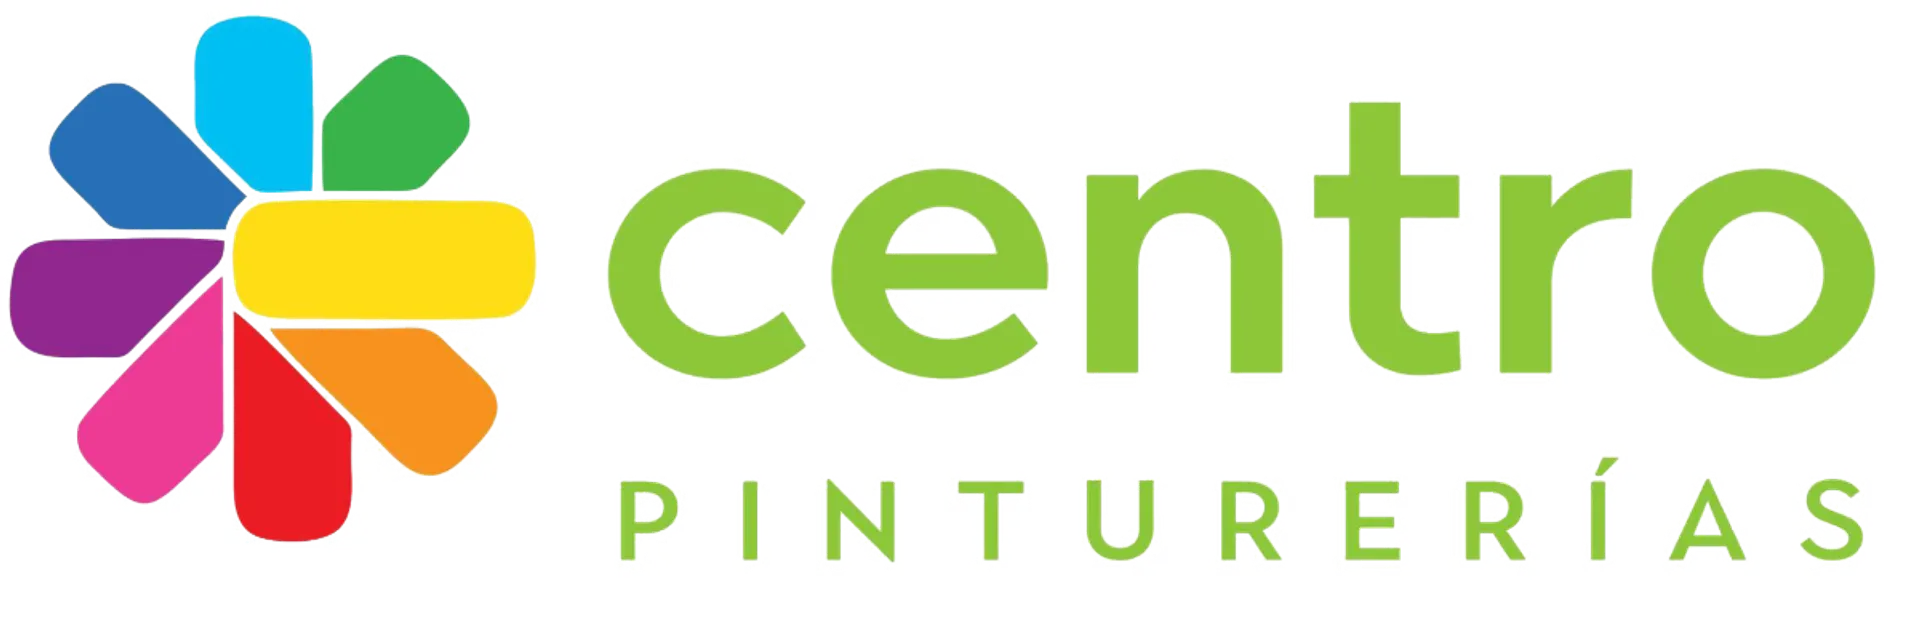 PINTURERIAS DEL CENTRO logo